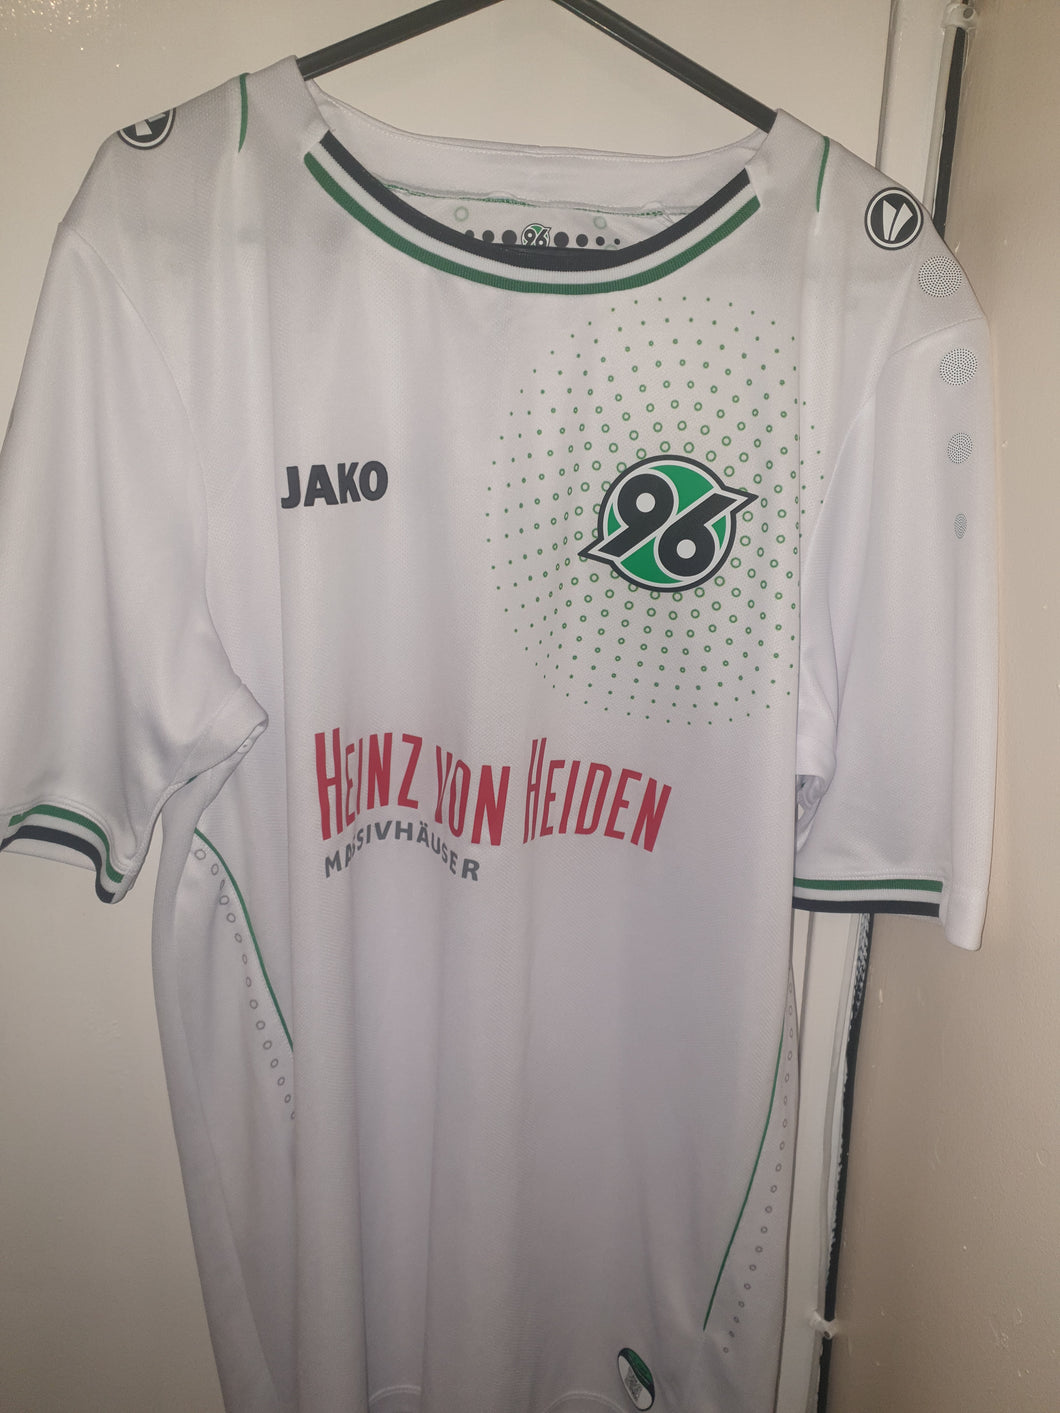 Hannover 96 2014-15 third shirt (Size Medium)